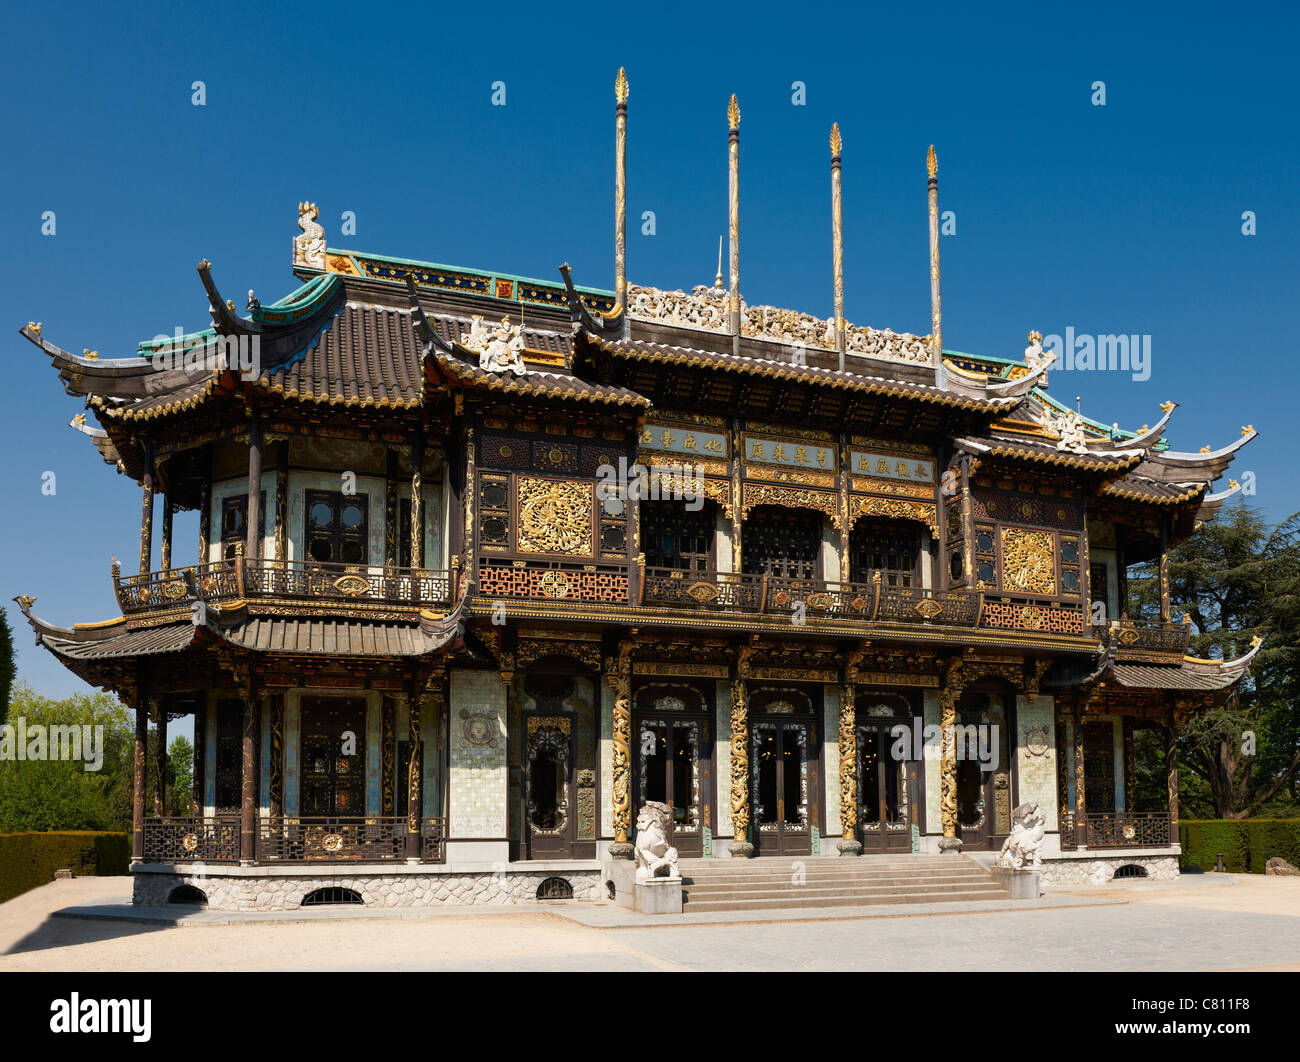 Chinesischer Pavillon, Pavillon Chinois, Brüssel, Belgien Stockfotografie -  Alamy